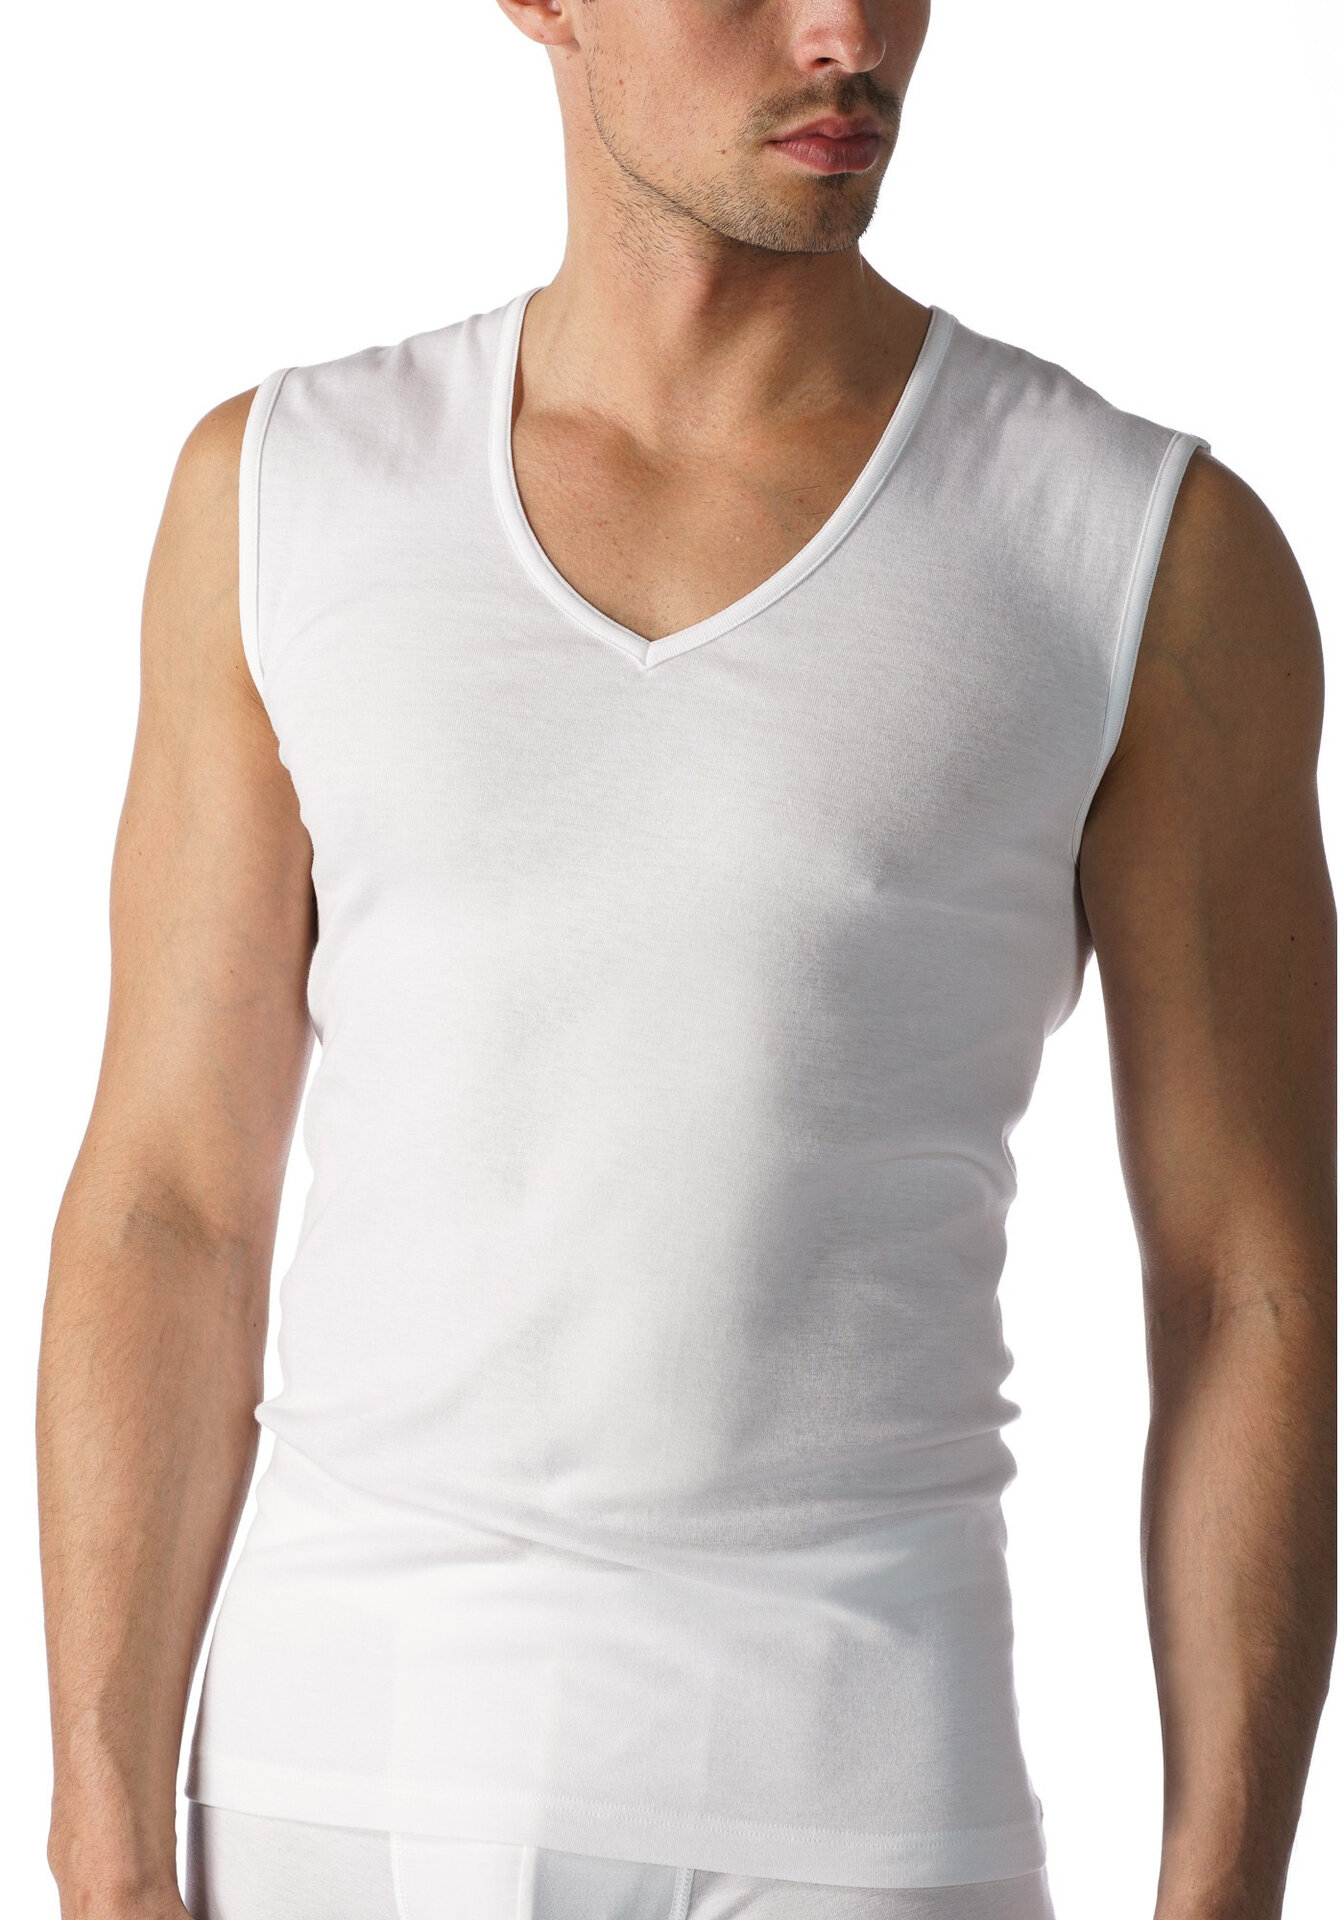 Mey Serie Casual Cotton Herren Muscle-Shirt